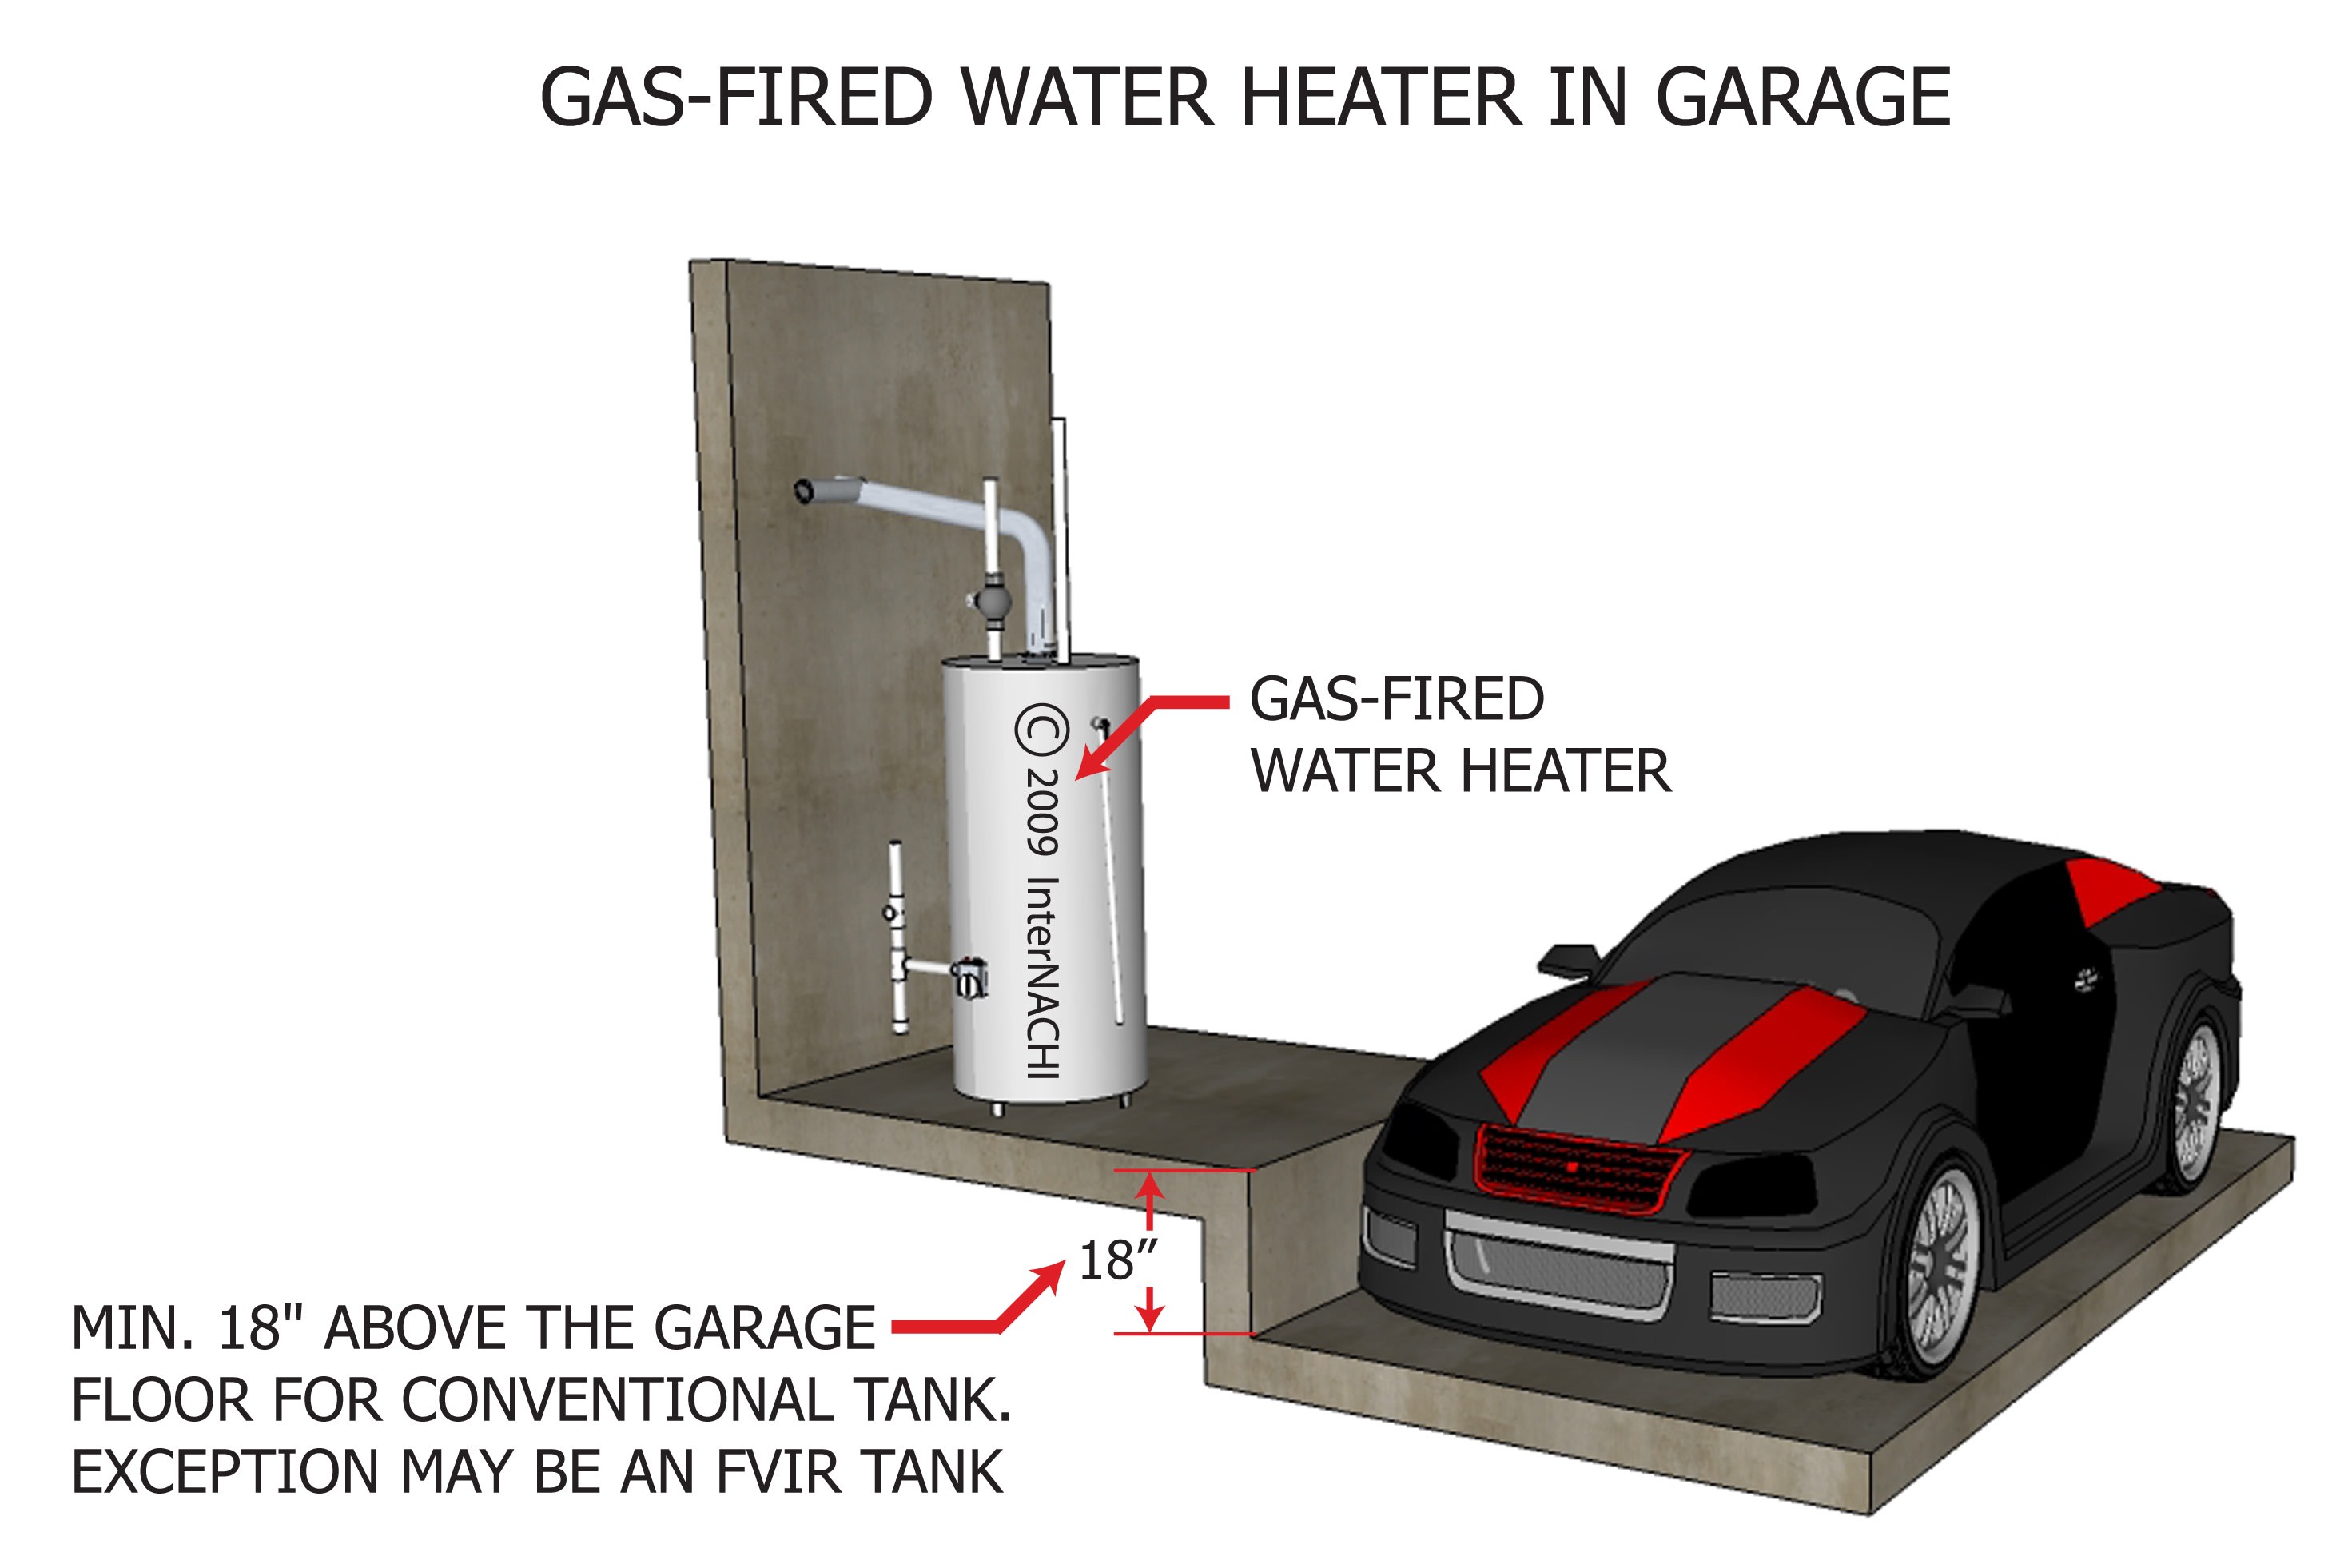 Gas-fired water heater in garage.